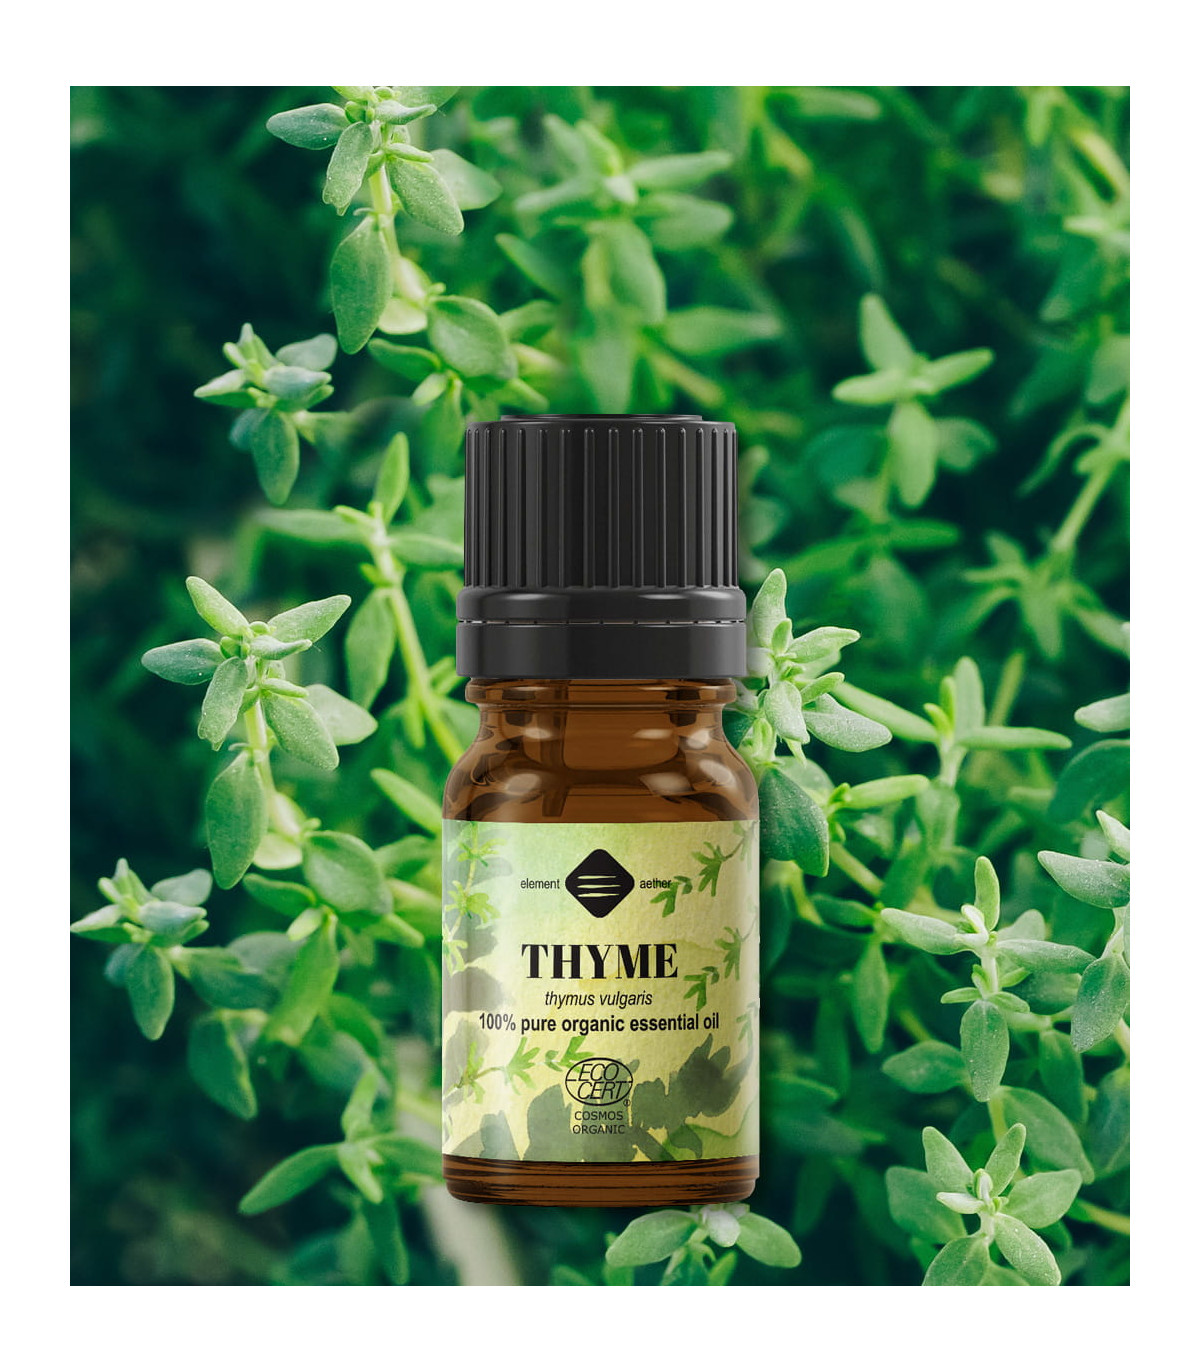 Cimbru BIO ulei esenţial (thymus vulgaris), 5 ml